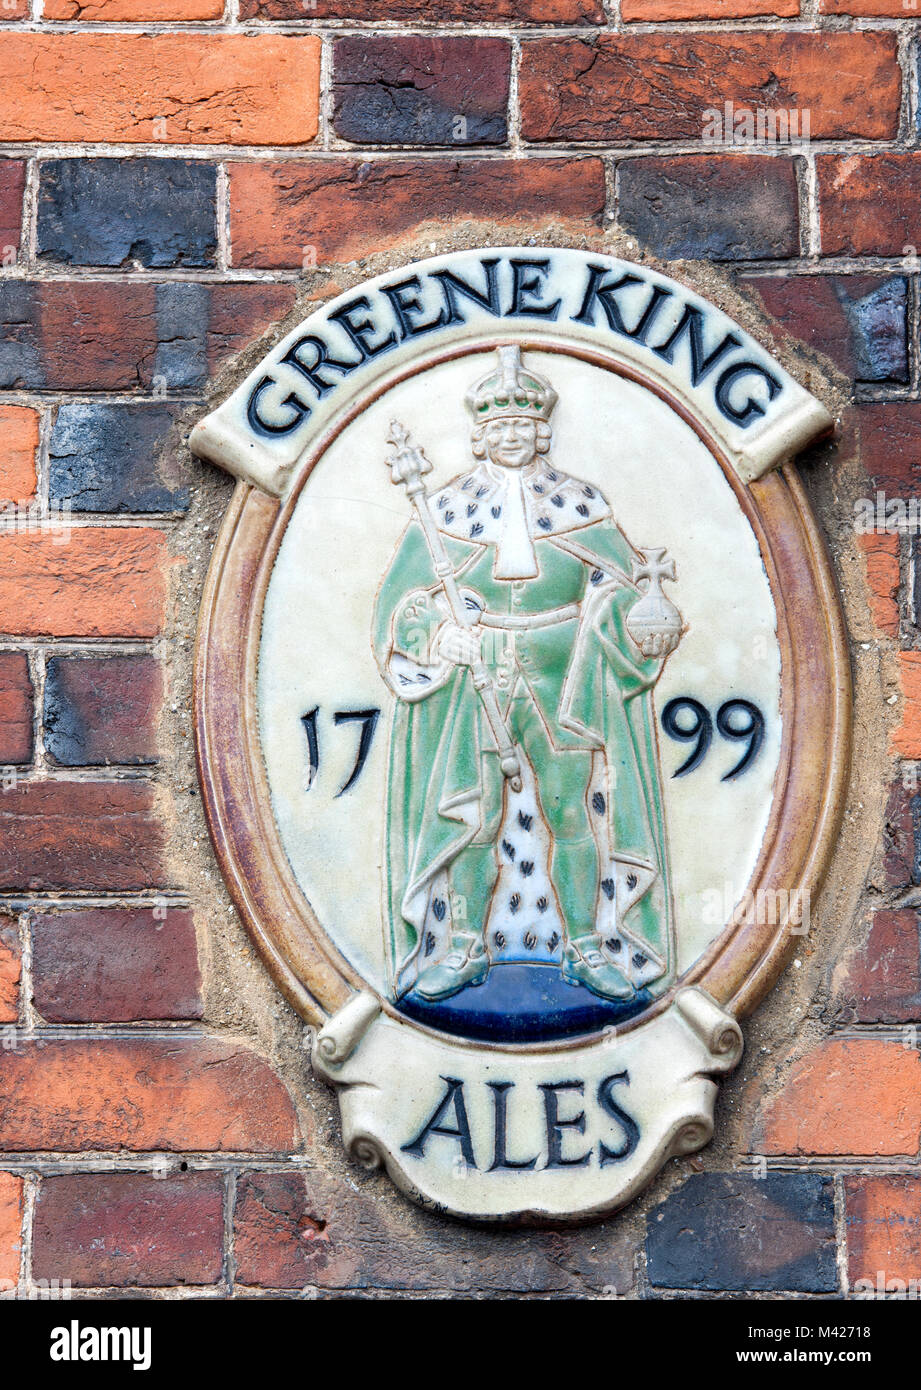 Ceramic plaque placed outside Greene King public houses, England, UK. Stock Photo